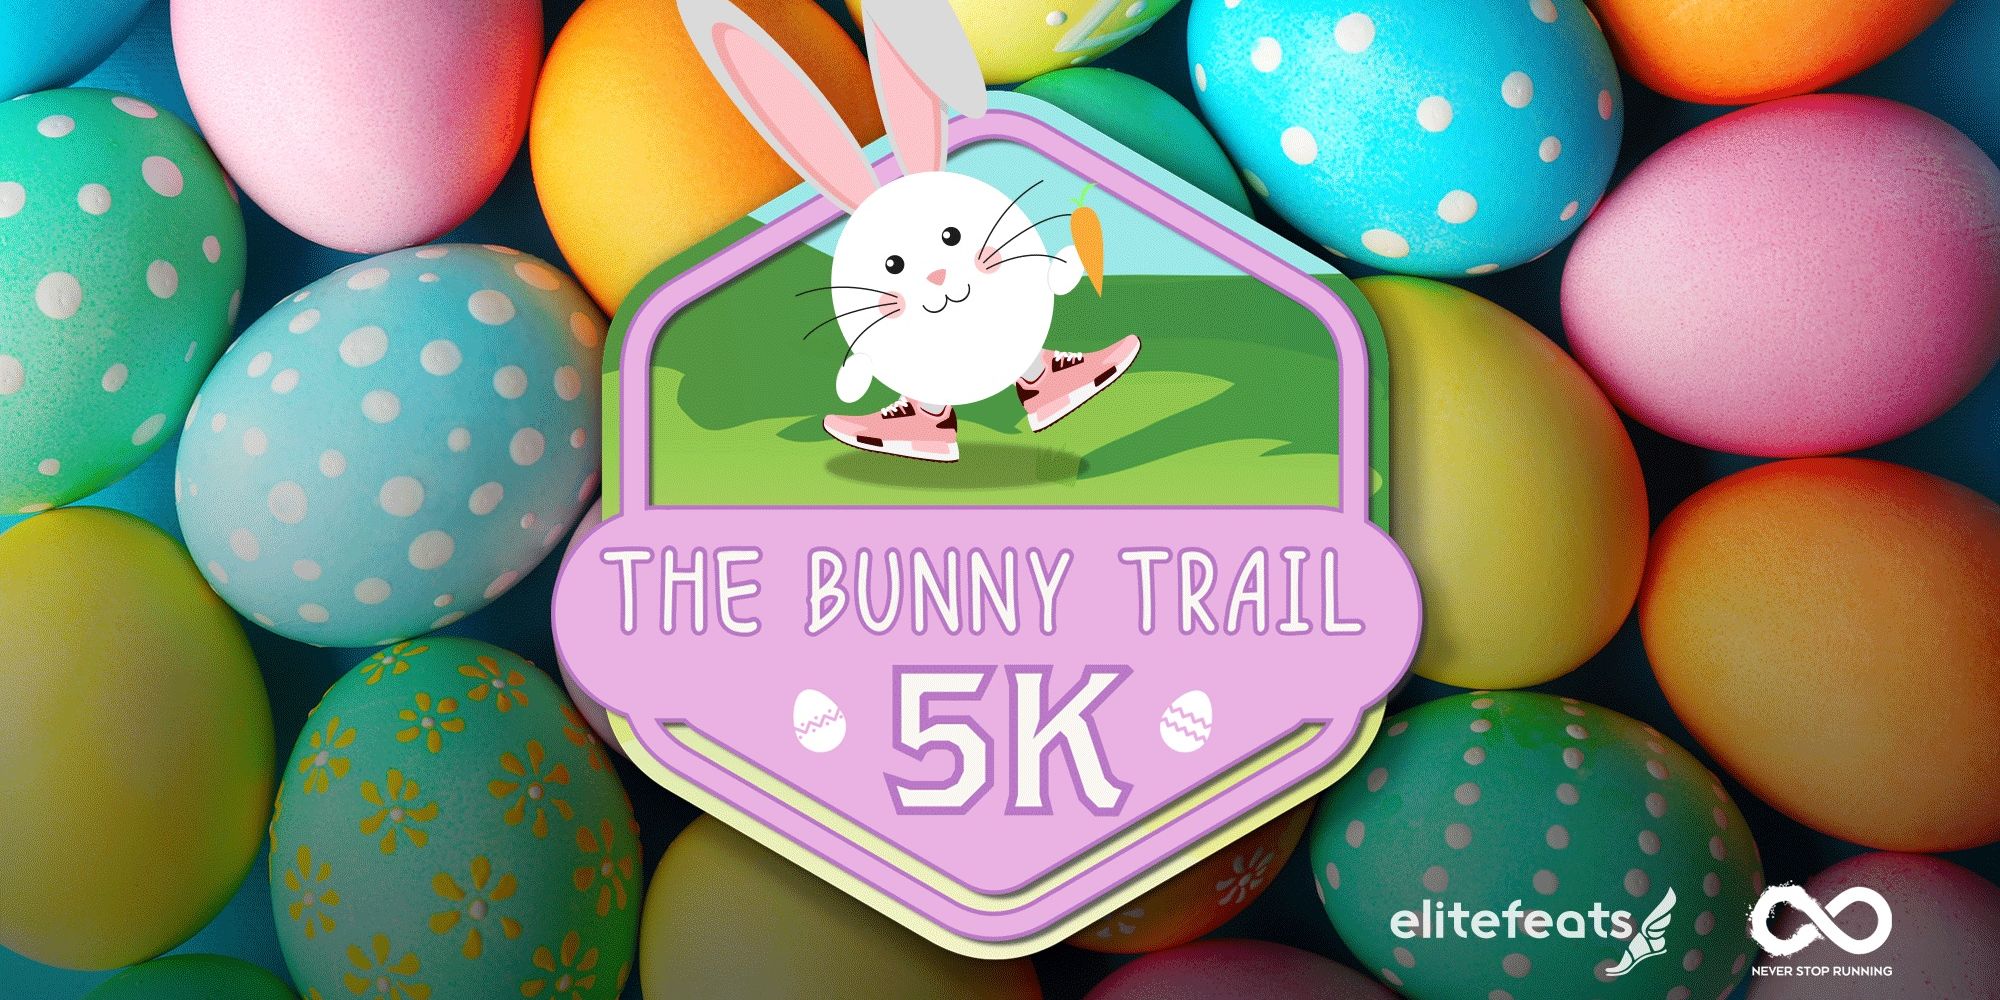 The Bunny Trail 5K Run/Walk promotional image